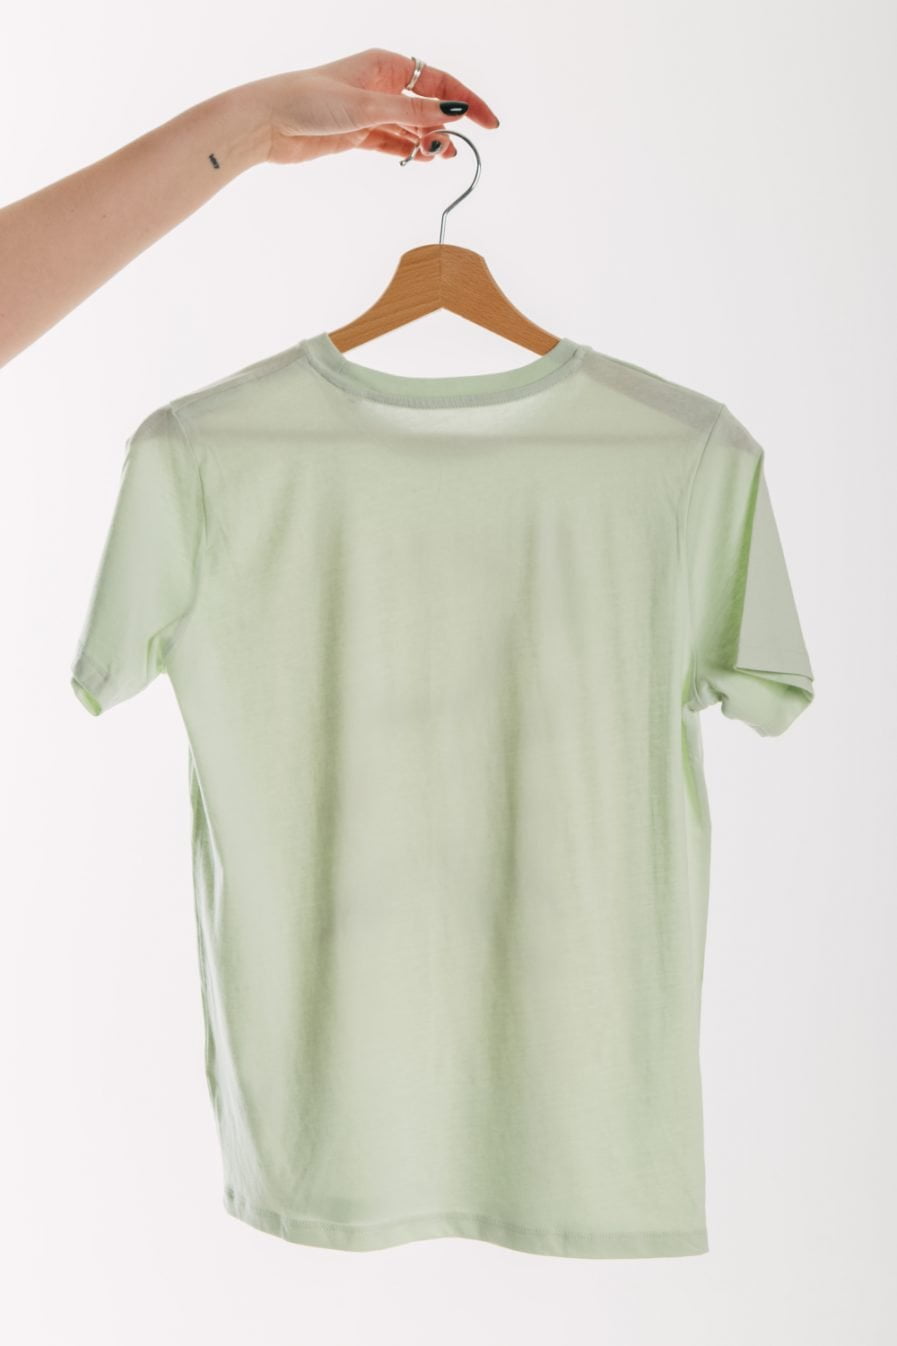 M50 x Zane Veldre Organic cotton Kid's T-shirt Birdies I Stem Green